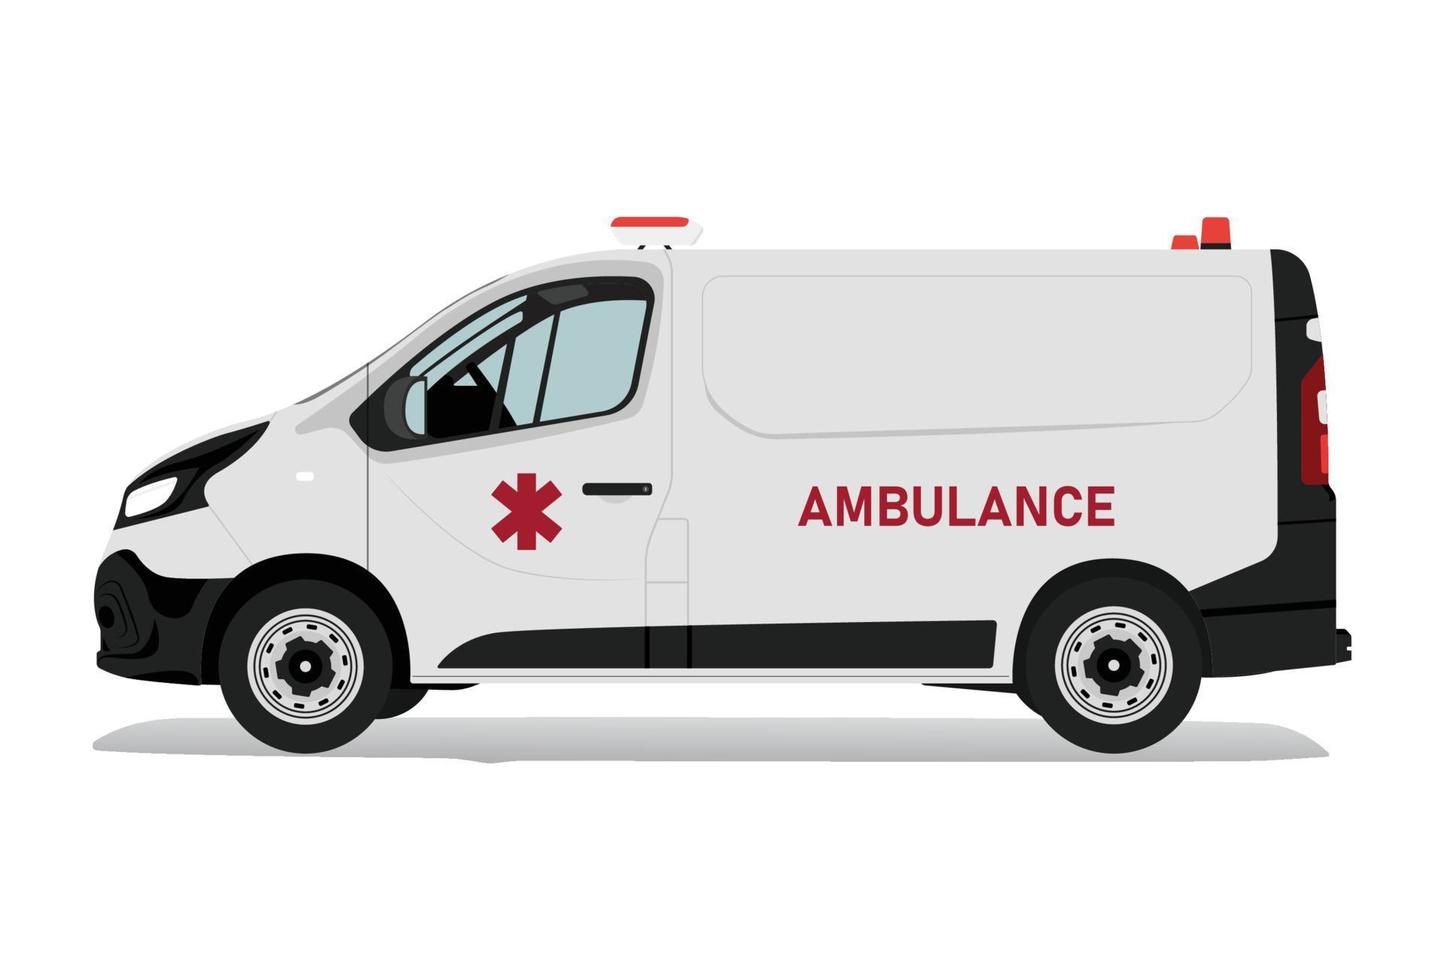 Ambulance Car Illustration, Emergency Medical Vehicule vector